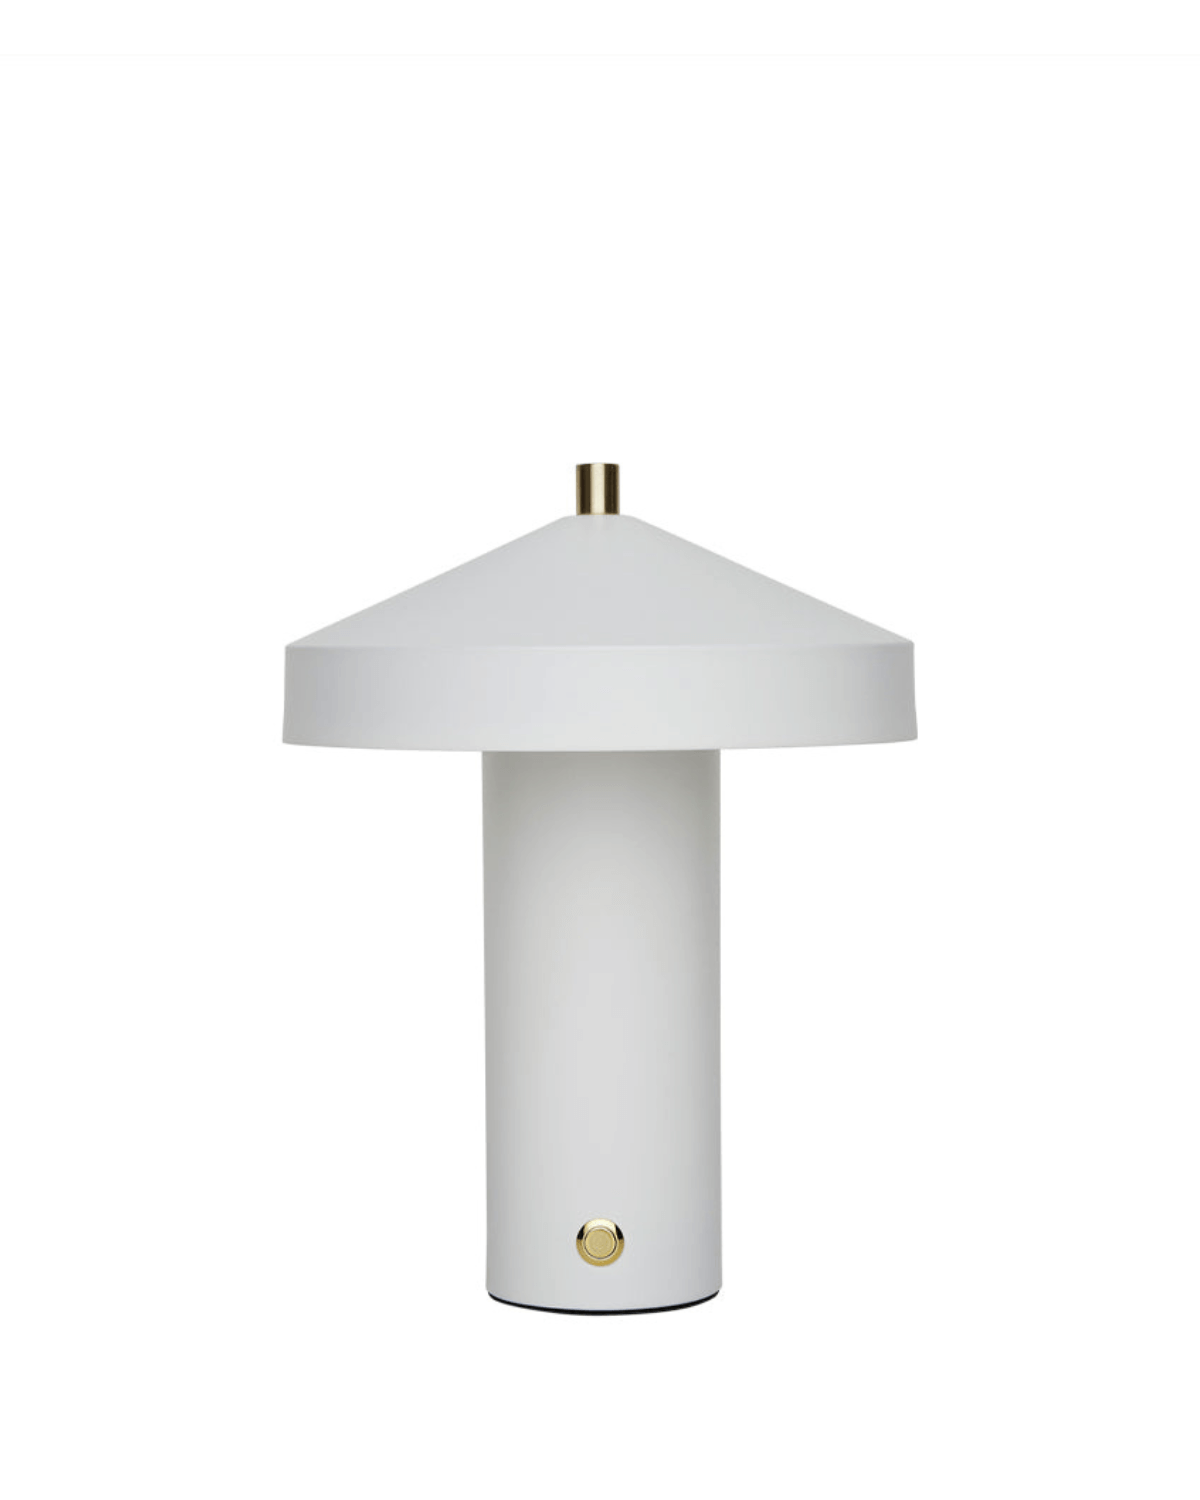 Bordlampe, Hatto, Hvid, LED lampe, OYOY Living Design